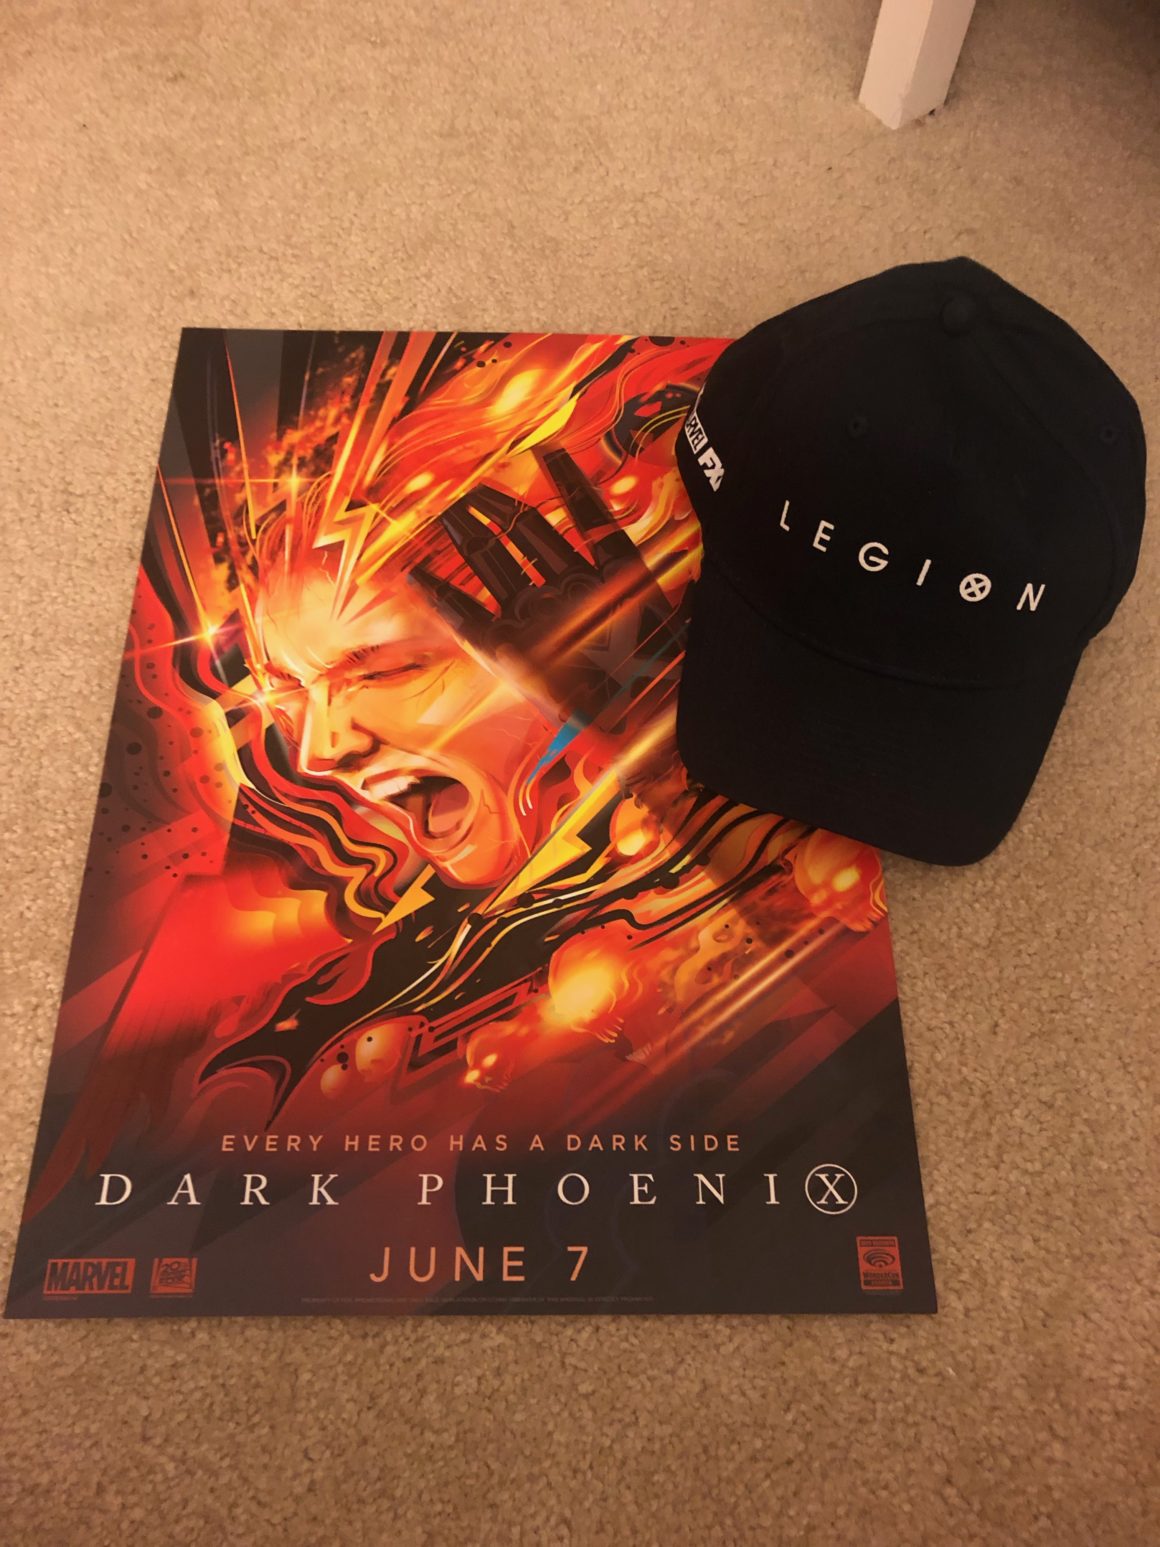 Goodies for attending the ​Dark Phoenix​ and ​Legion​ panel. Photo: Danny Pham/dorkaholics.